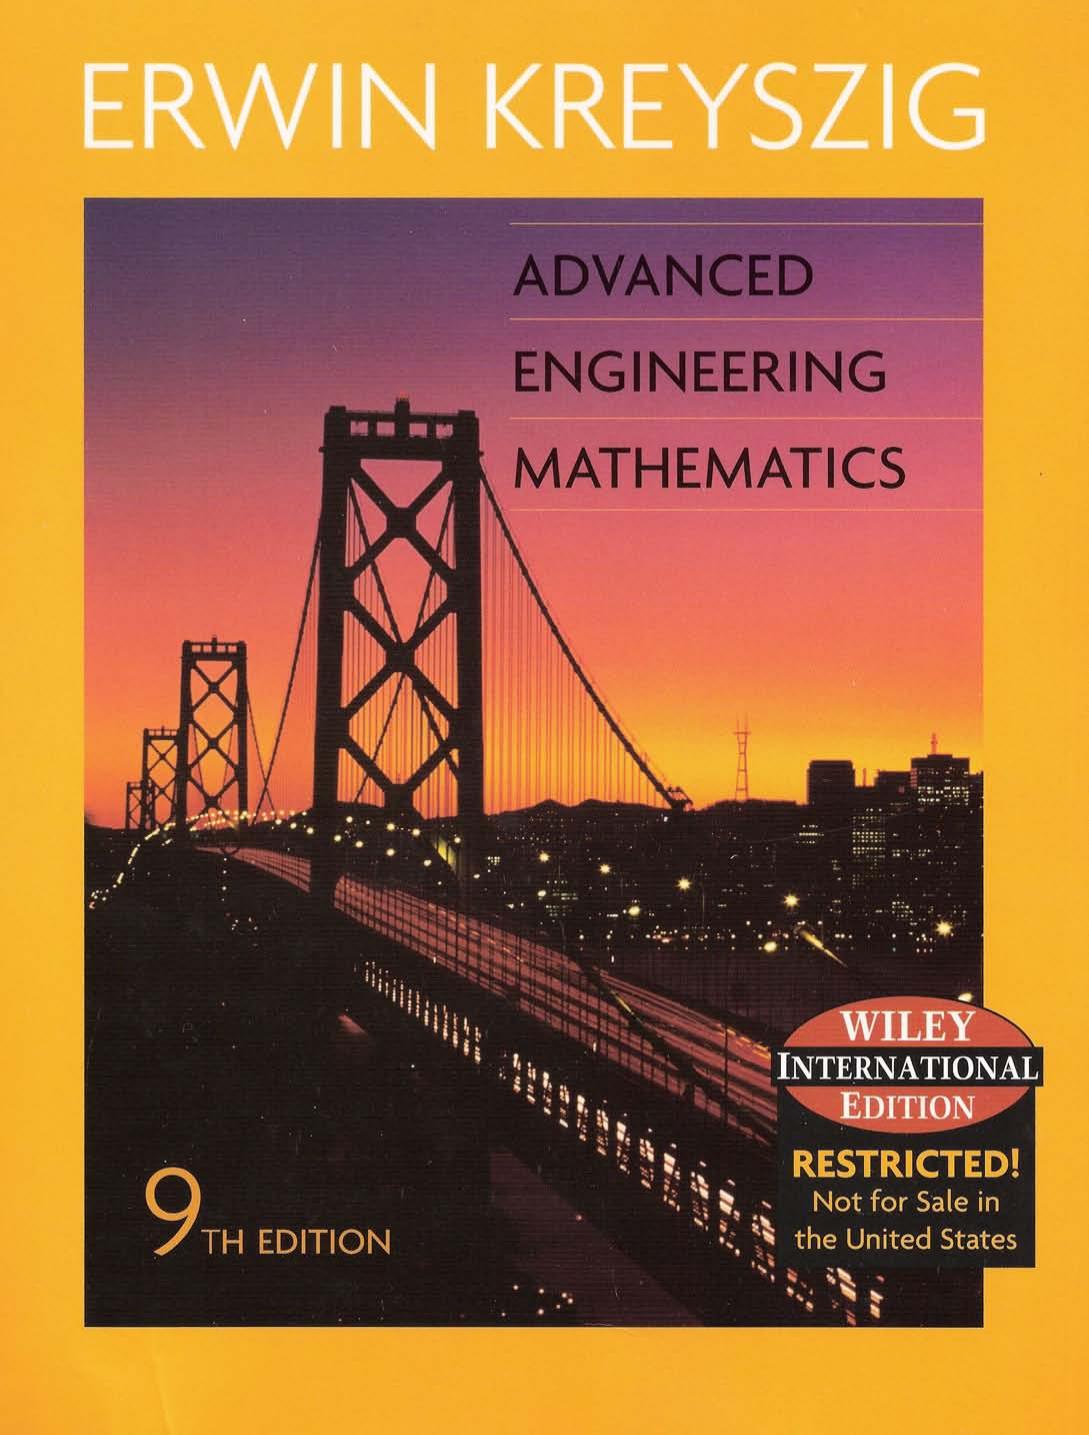 Advanced Engineering Mathematics ERWING KREYSZIG 2006